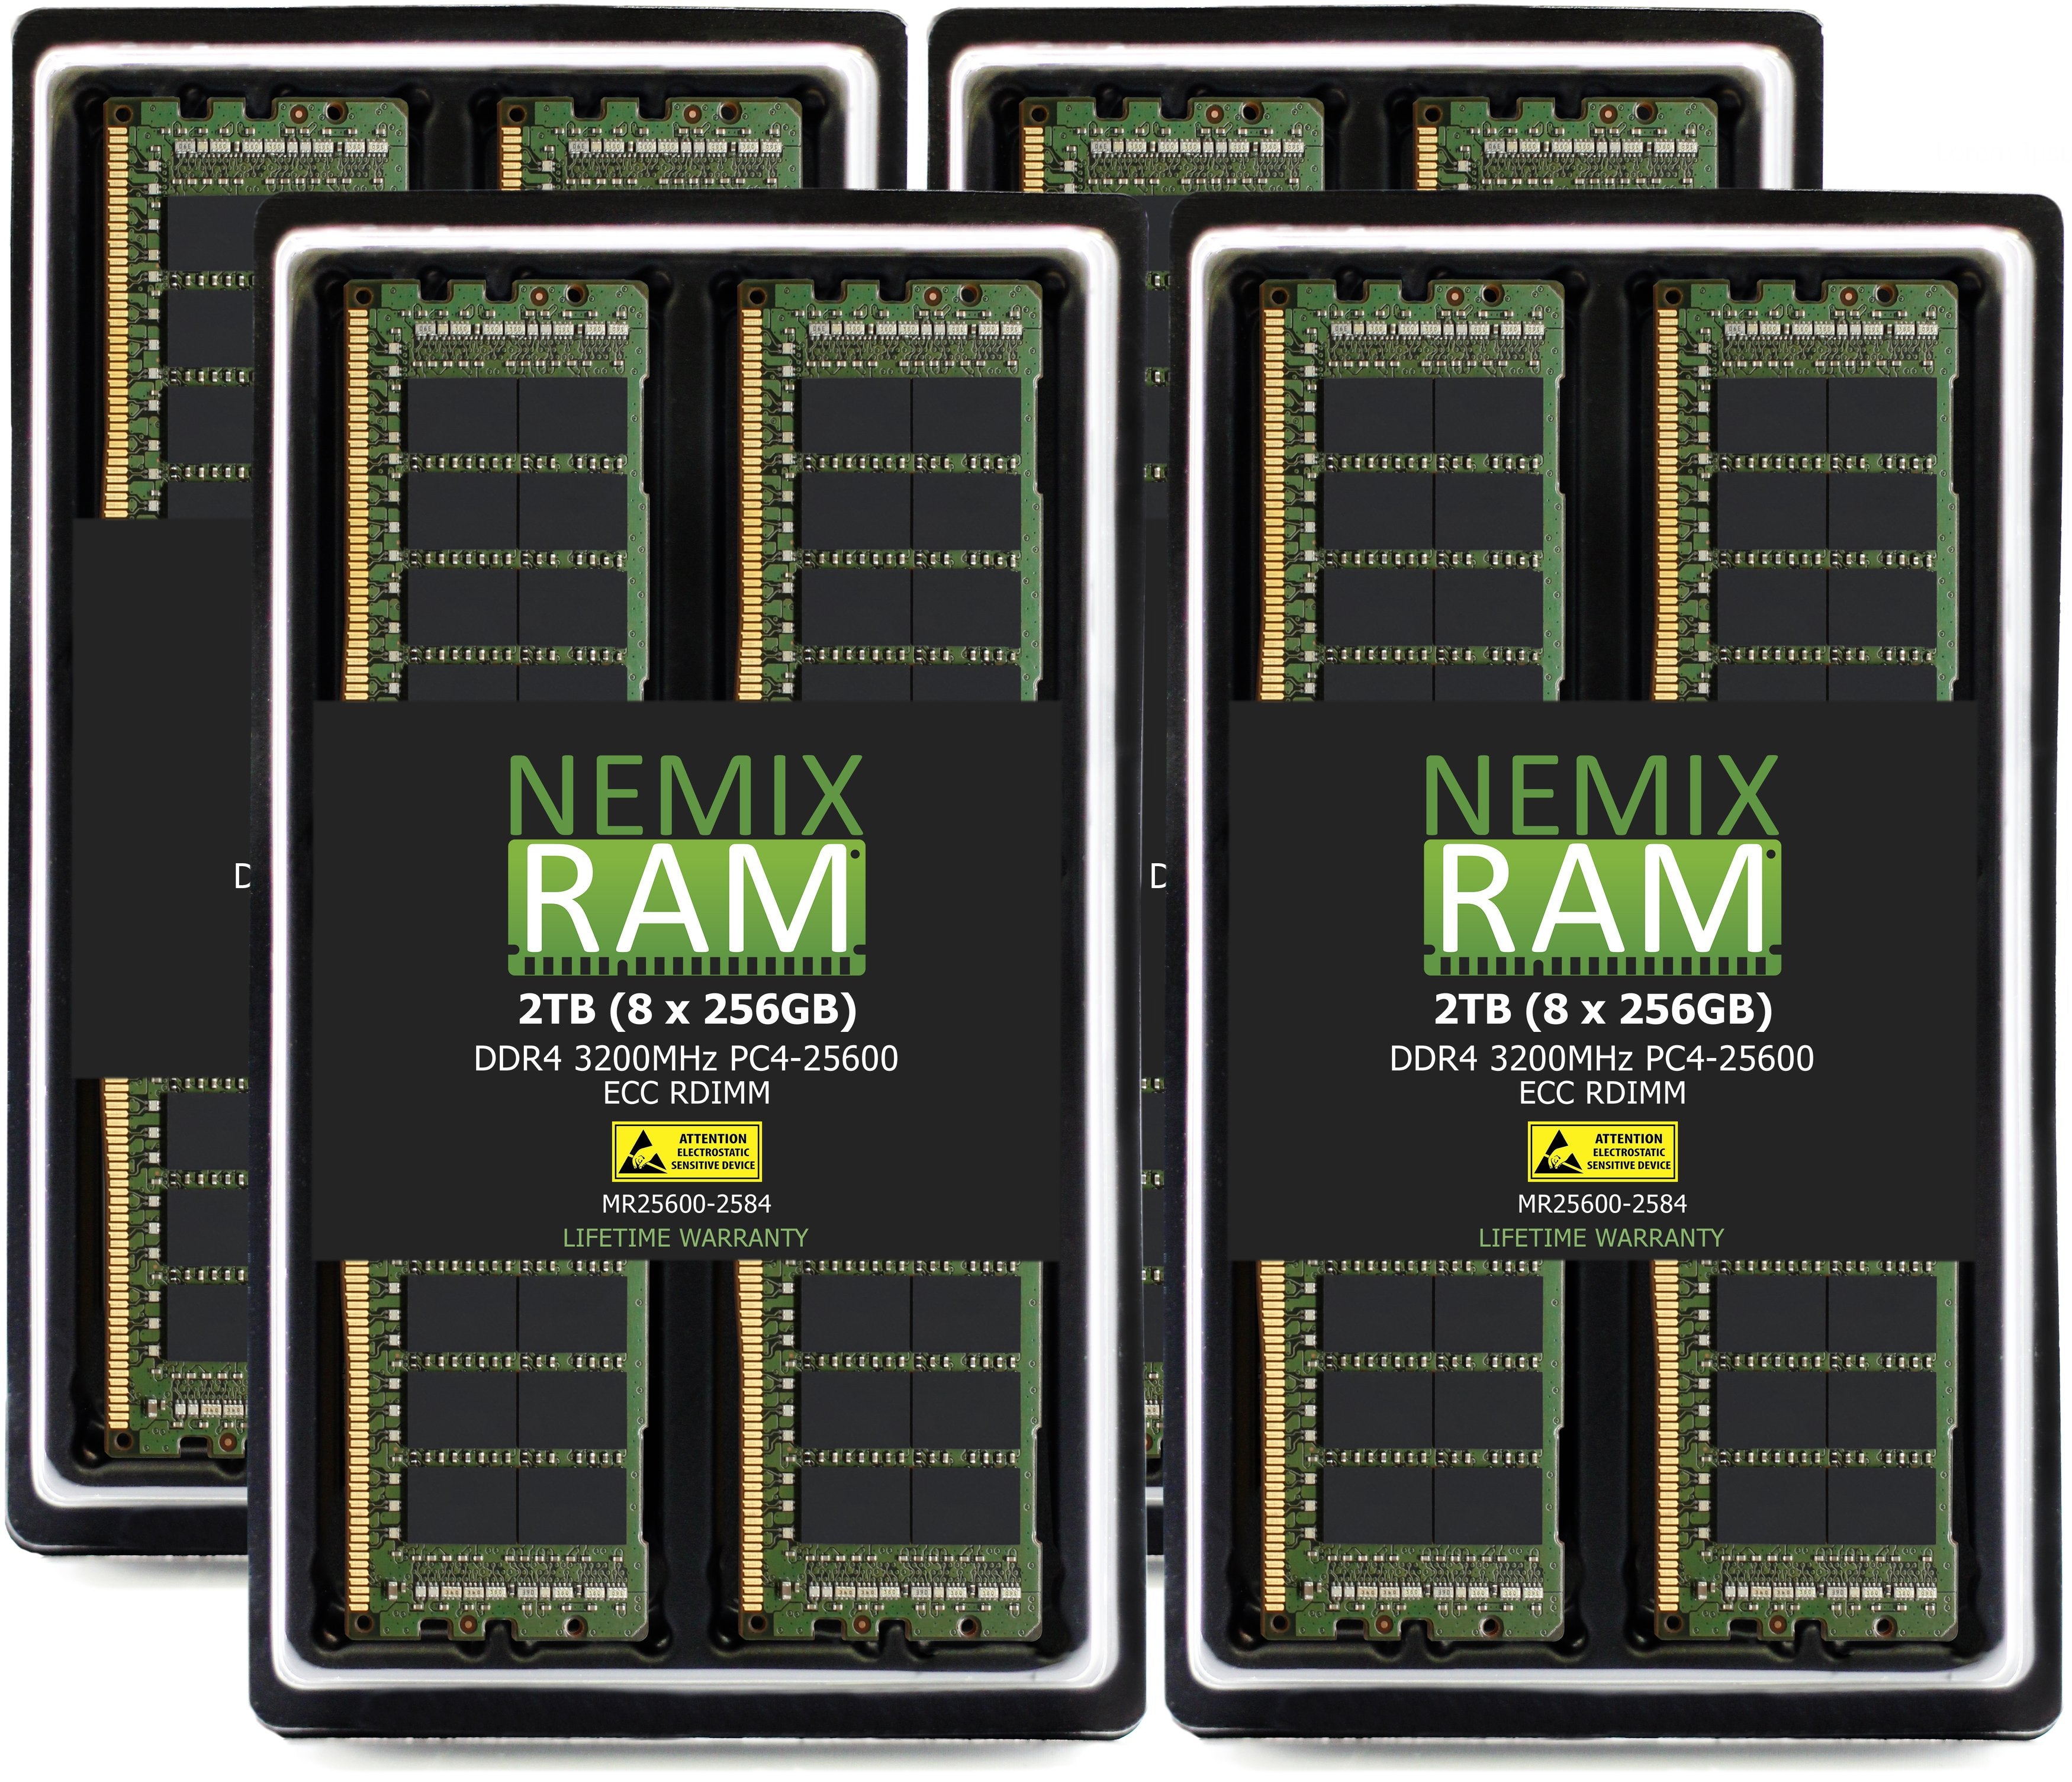 DDR4 3200MHZ PC4-25600 RDIMM for ASUS Pro WS WRX80E-SAGE SE WIFI WRX8 AMD WRX80